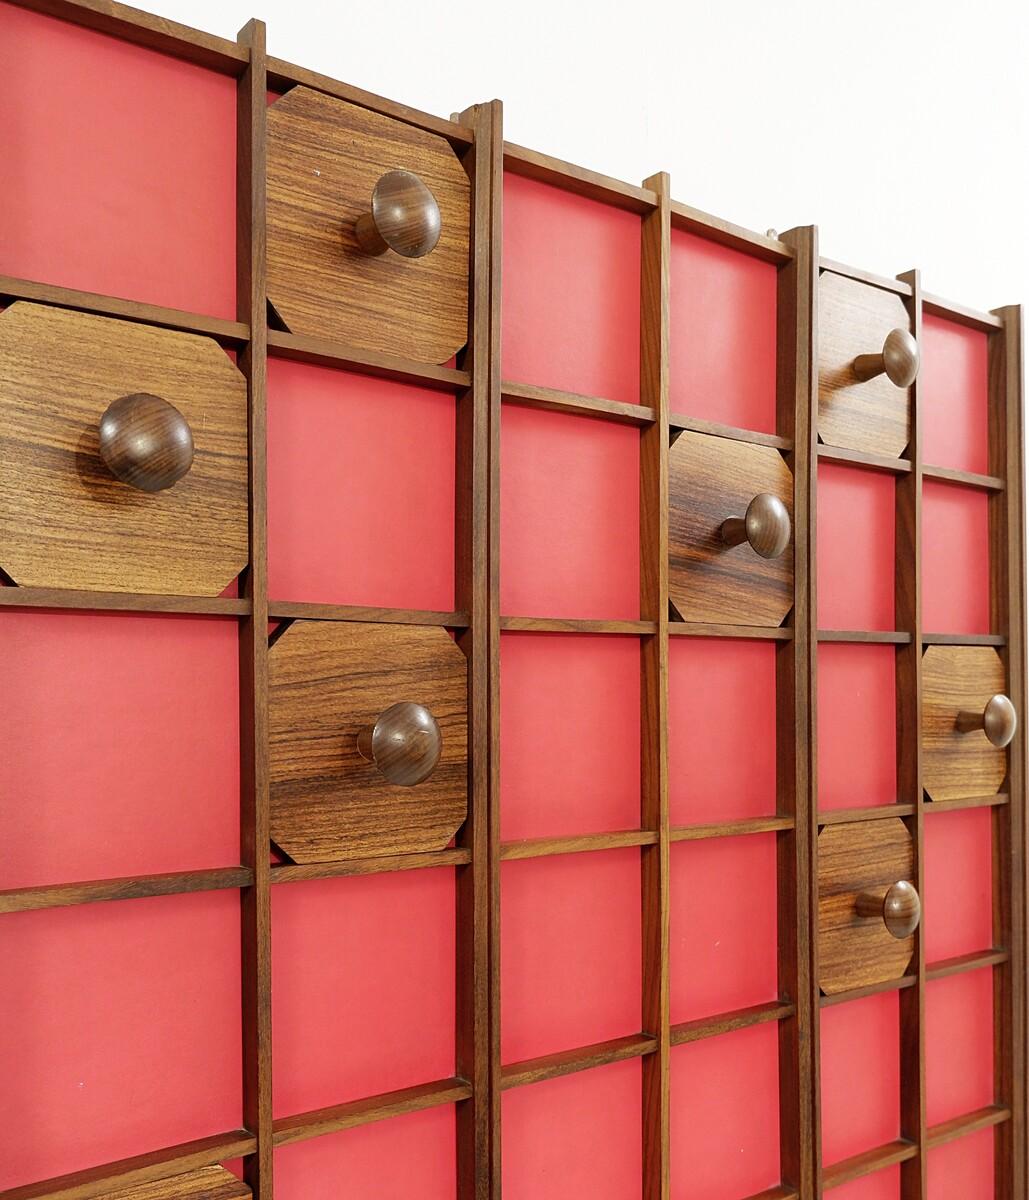 Red Italian wooden coat rack - 1960s
European.